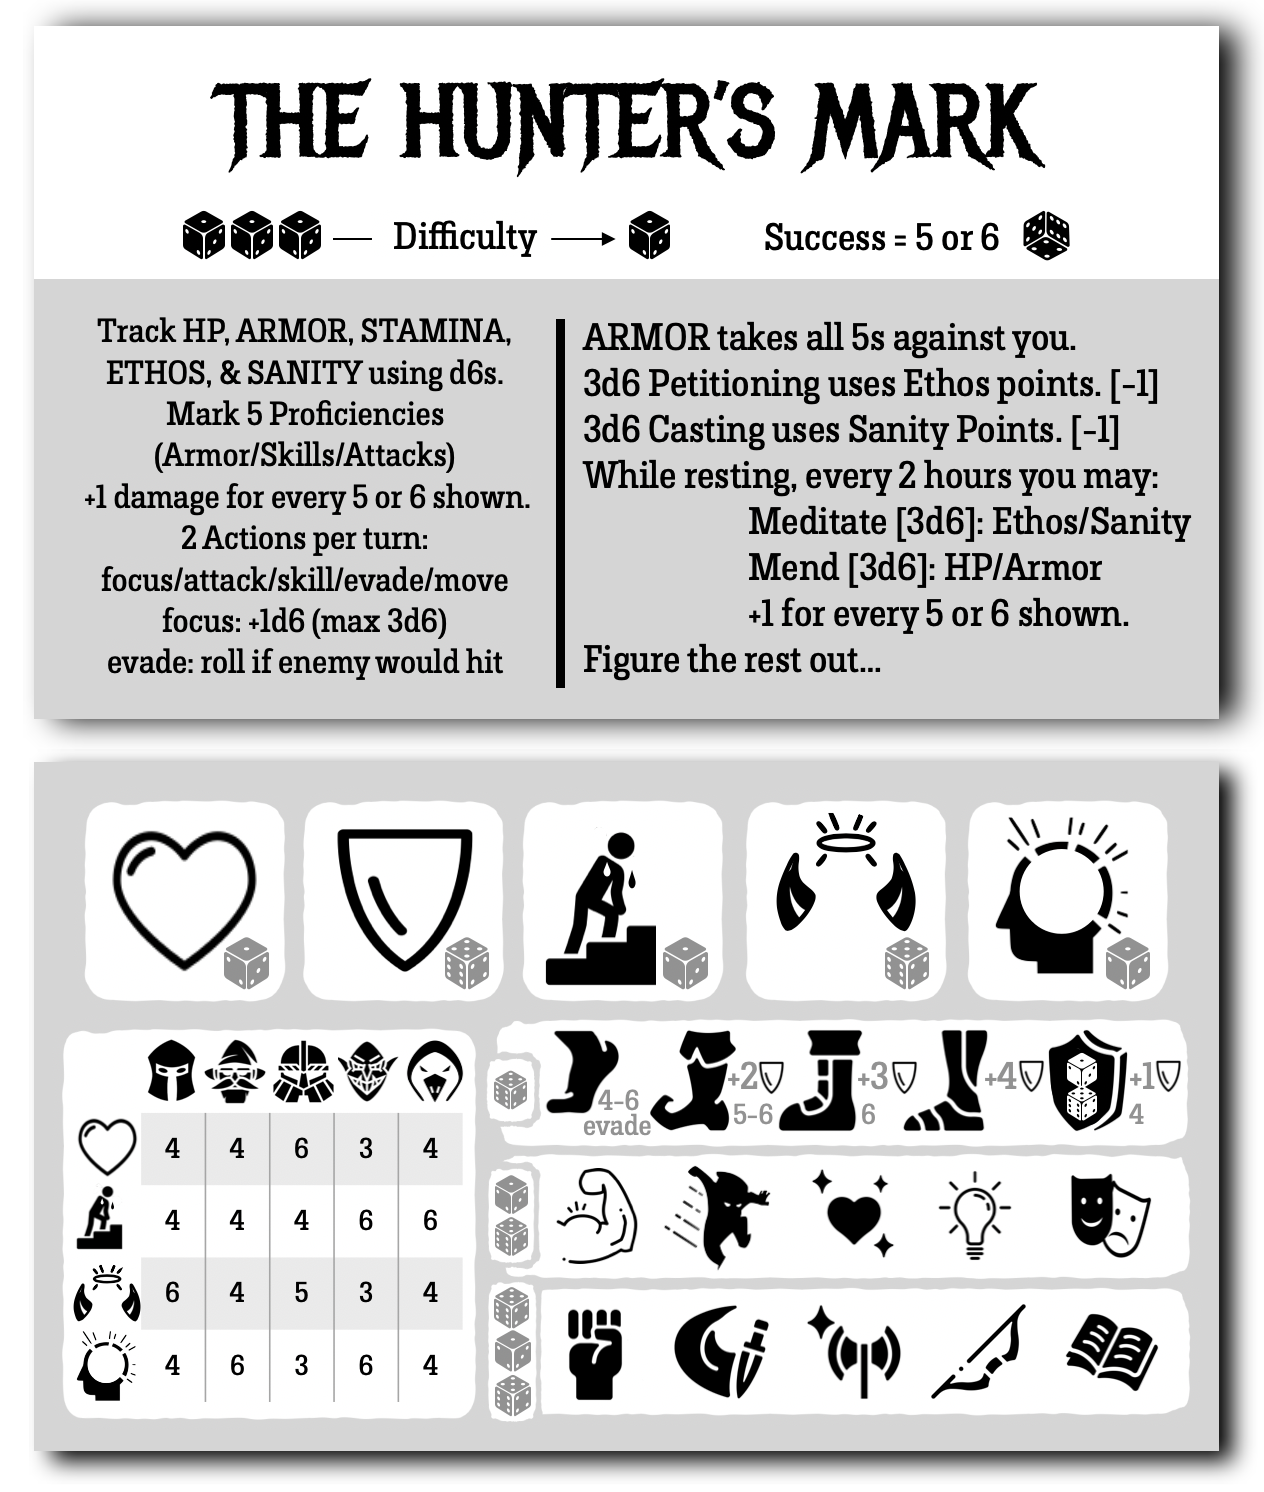 The Hunter's Mark